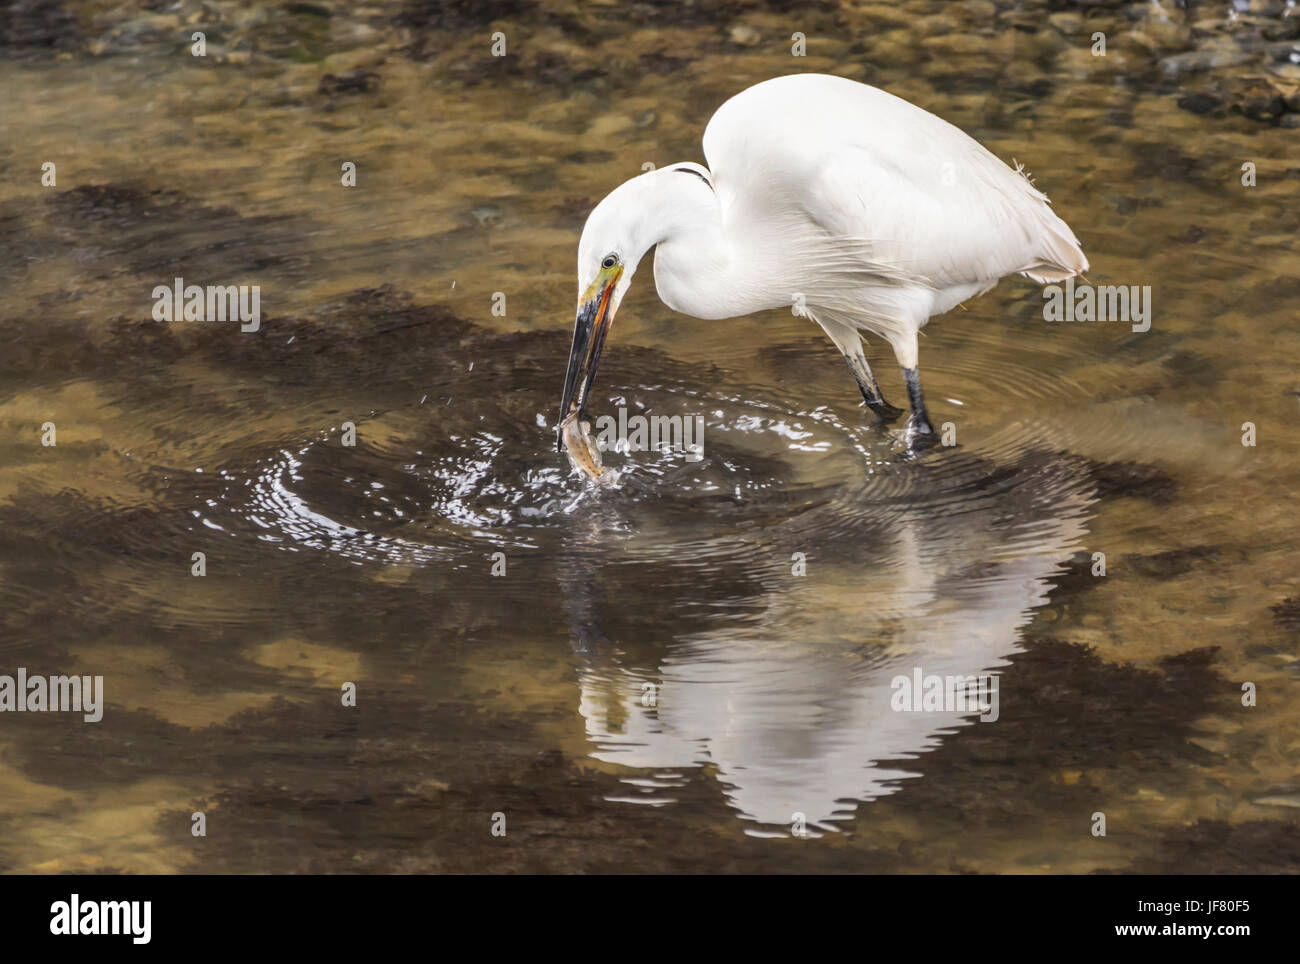 Little Egret (Egretta garzetta) standing in shallow water catching a fish in its beak. Stock Photo